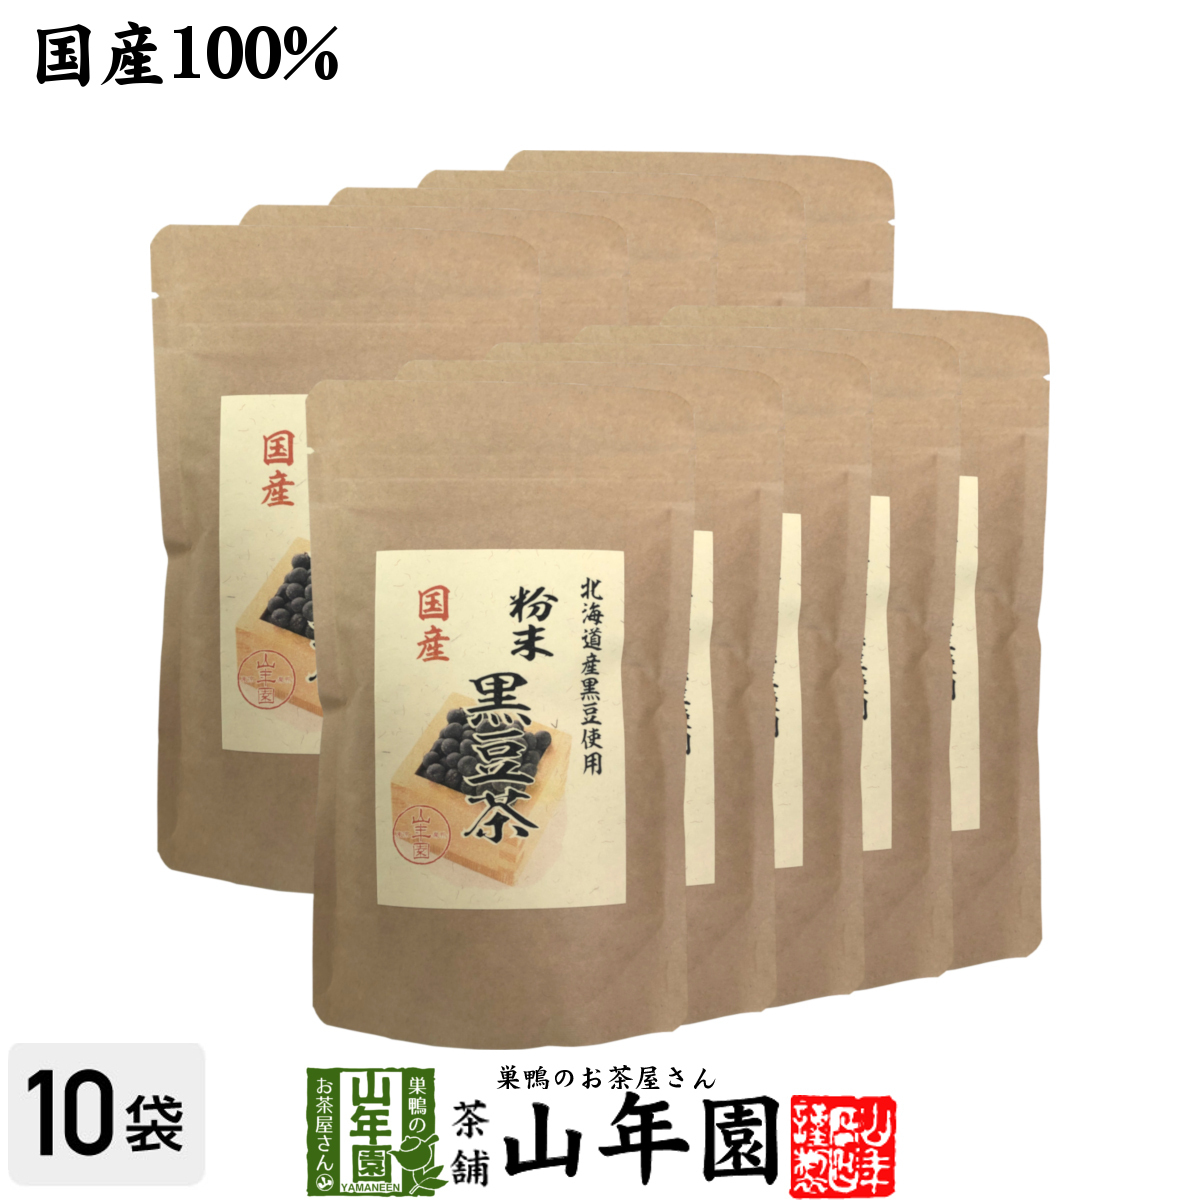  domestic production 100% Hokkaido production black soybean tea powder 100g×10 sack set prejudice. Hokkaido production black soybean only . a little over fire .... flour . did.